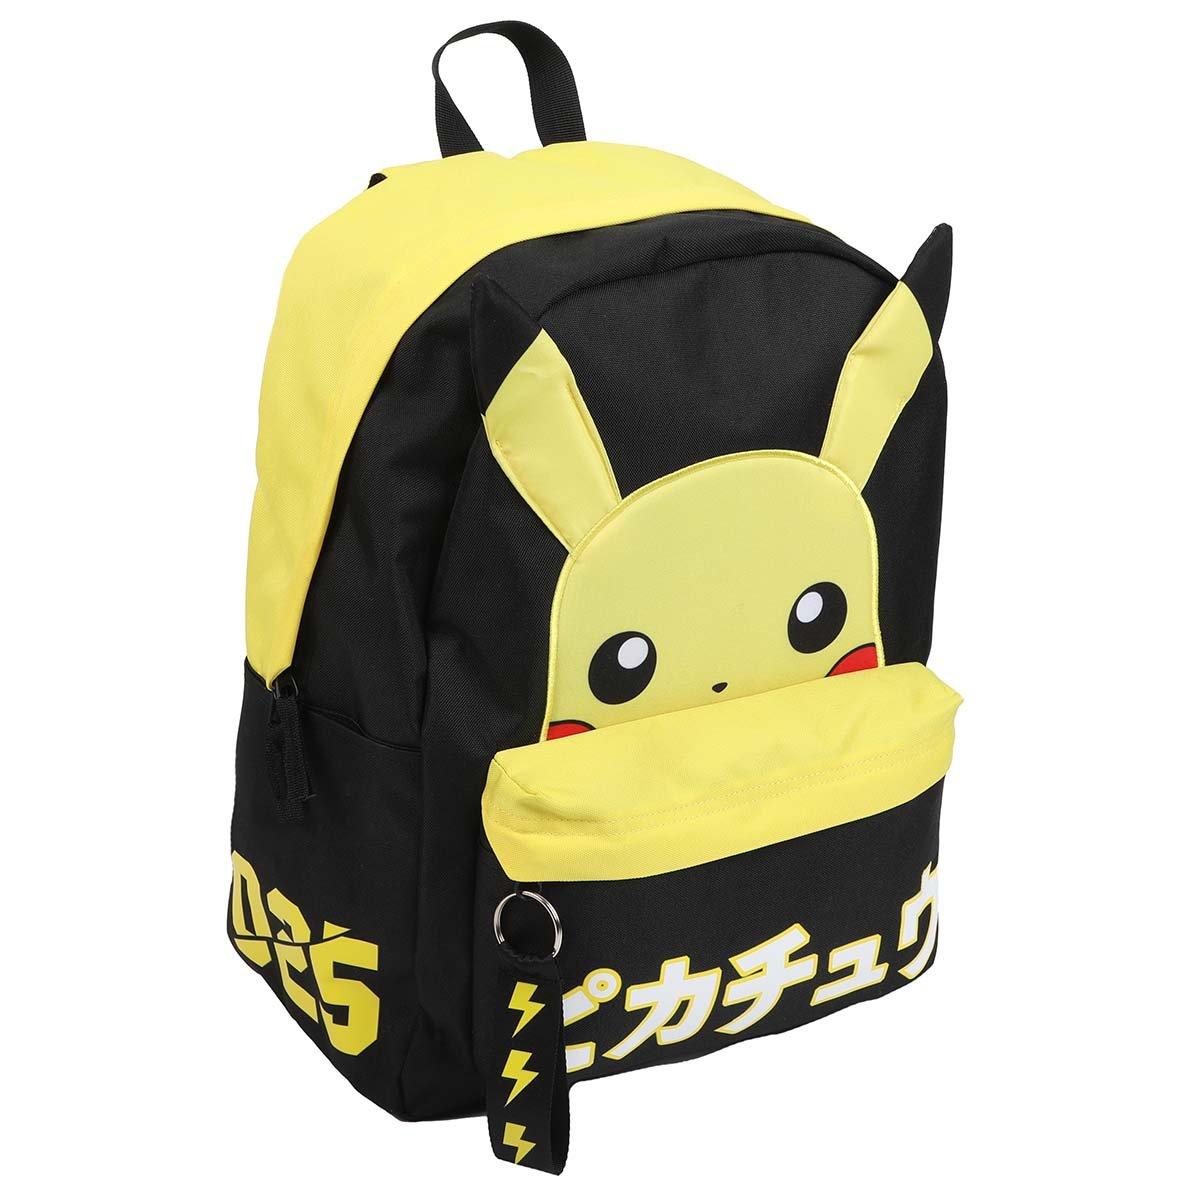 https://media.gamestop.com/i/gamestop/11170164_ALT01/Pokemon-Pikachu-Backpack?$pdp$